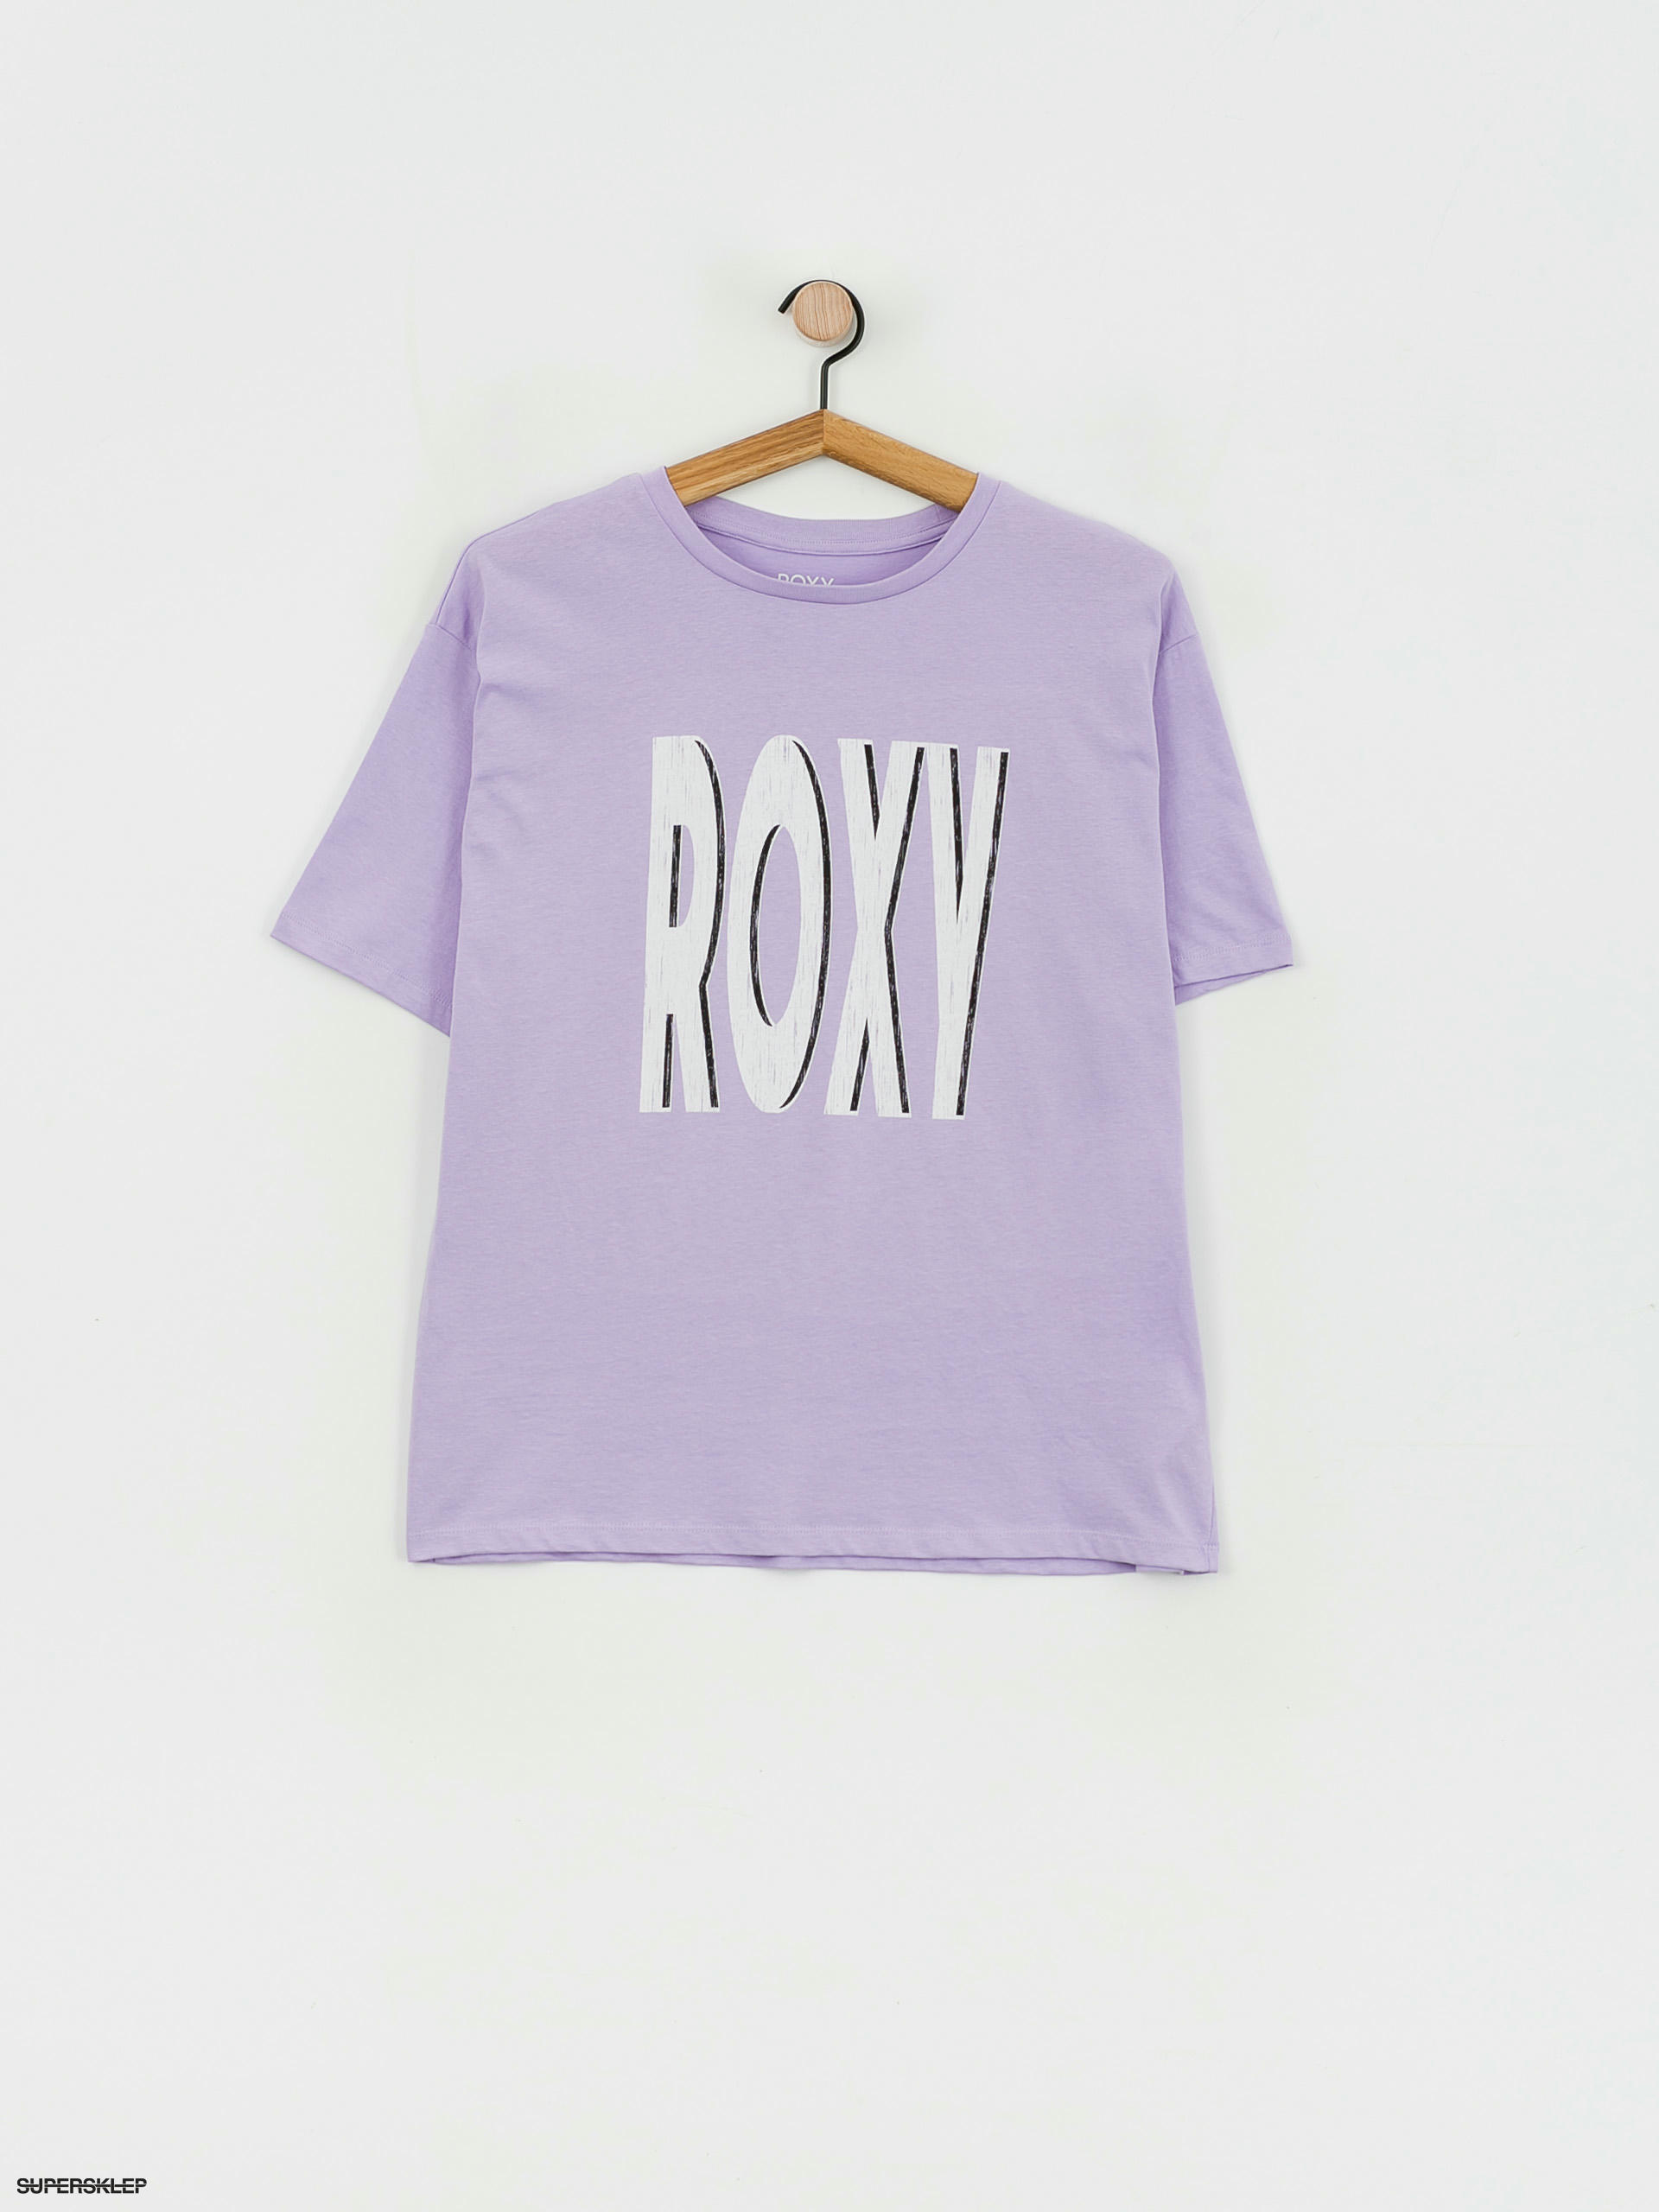 T-shirt Wmn Under rose) (purple Roxy Sky The Sand